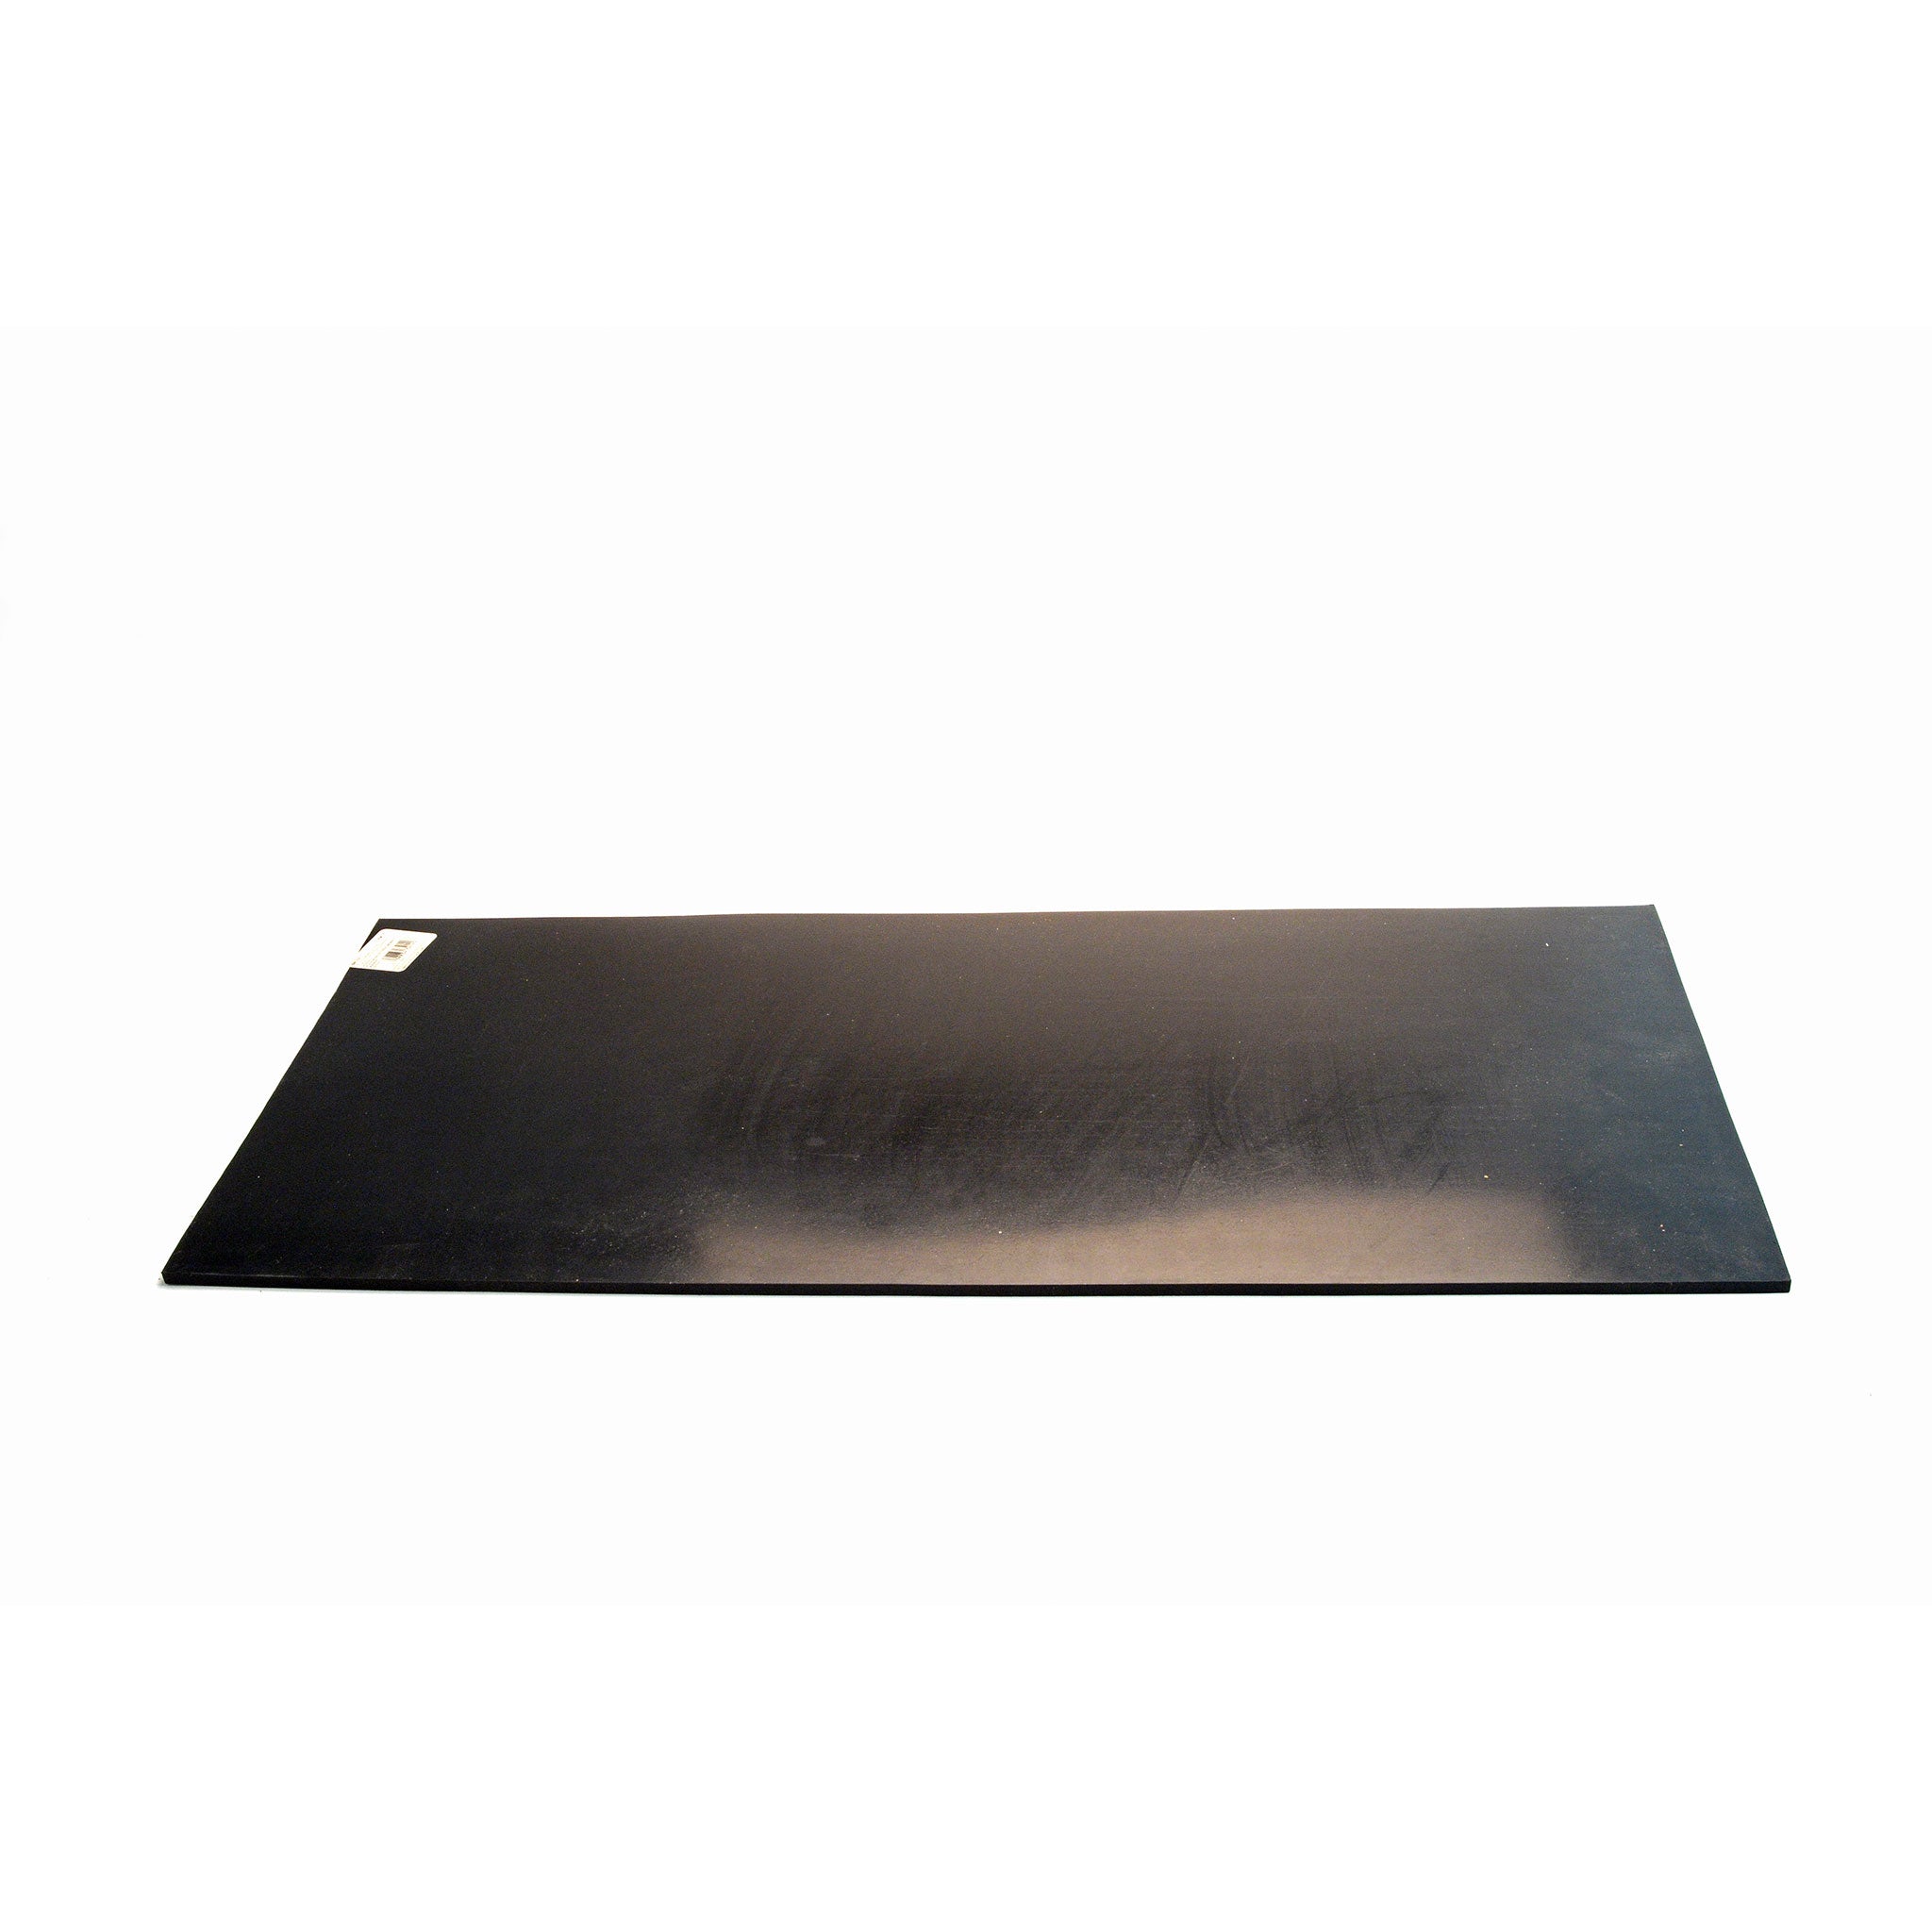 305 x 610mm Poundo Board from Identity Leathercraft